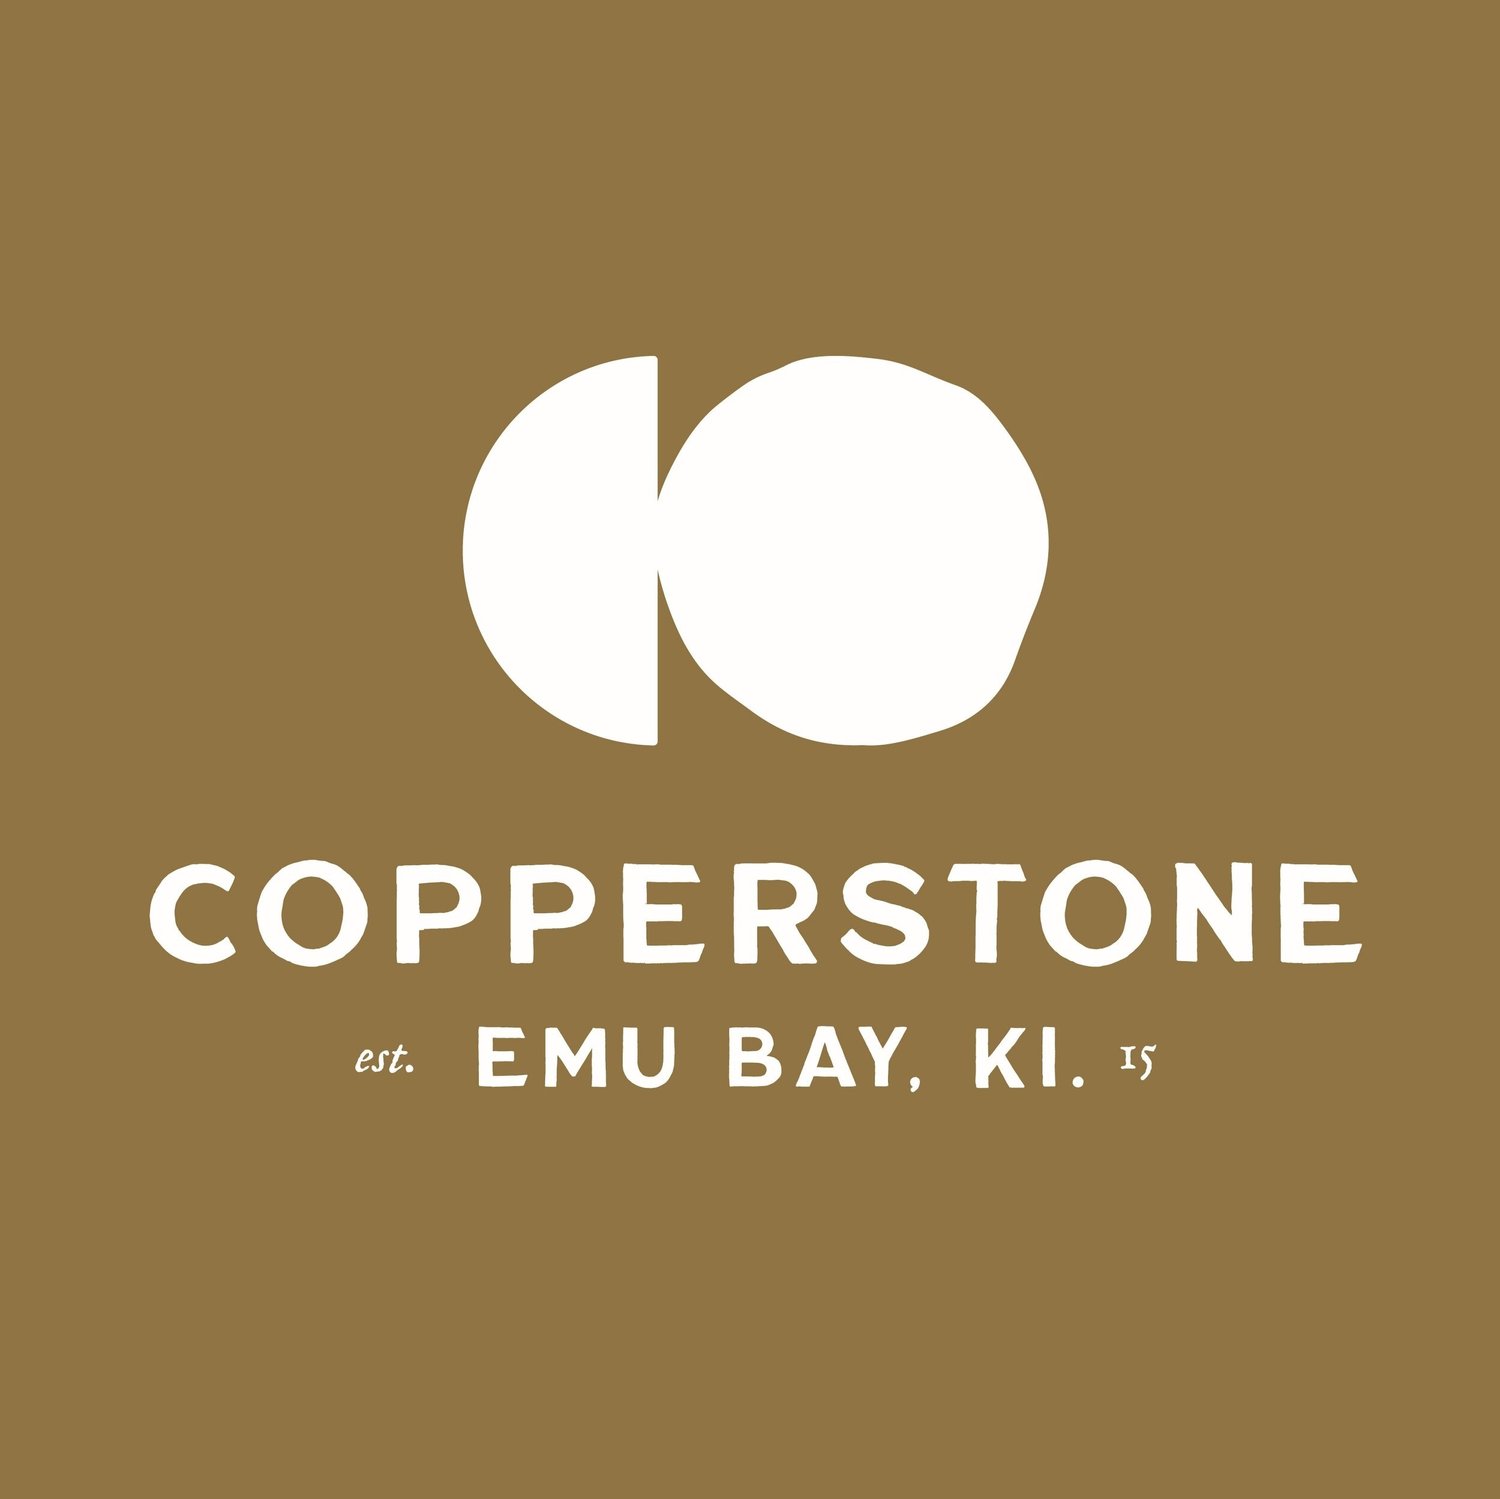 Copperstone KI, Emu Bay Kangaroo Island